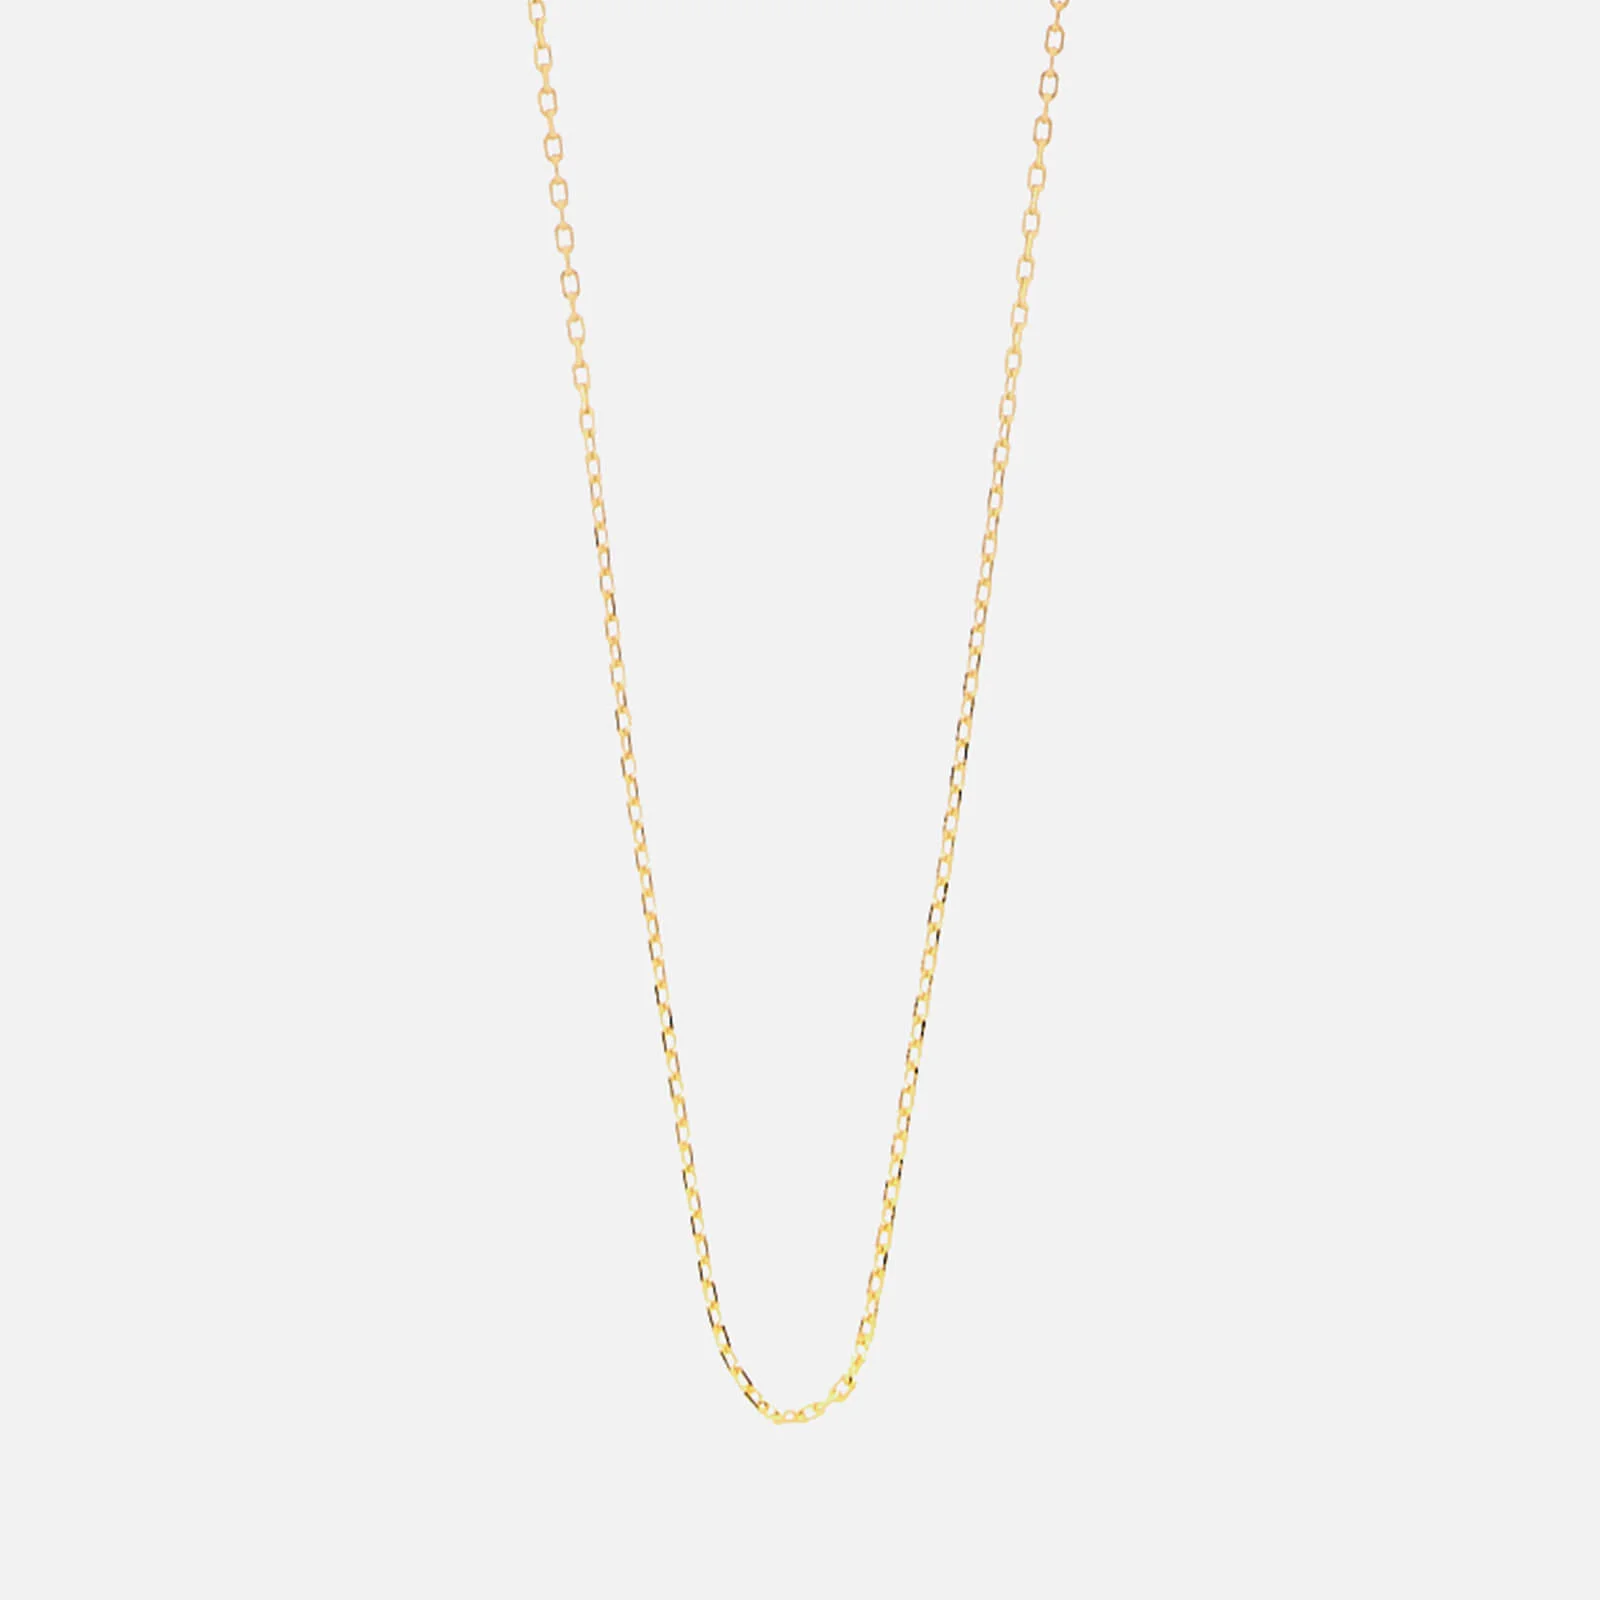 Anni Lu Women's Cross Chain Necklace - 55cm - Gold Image 1